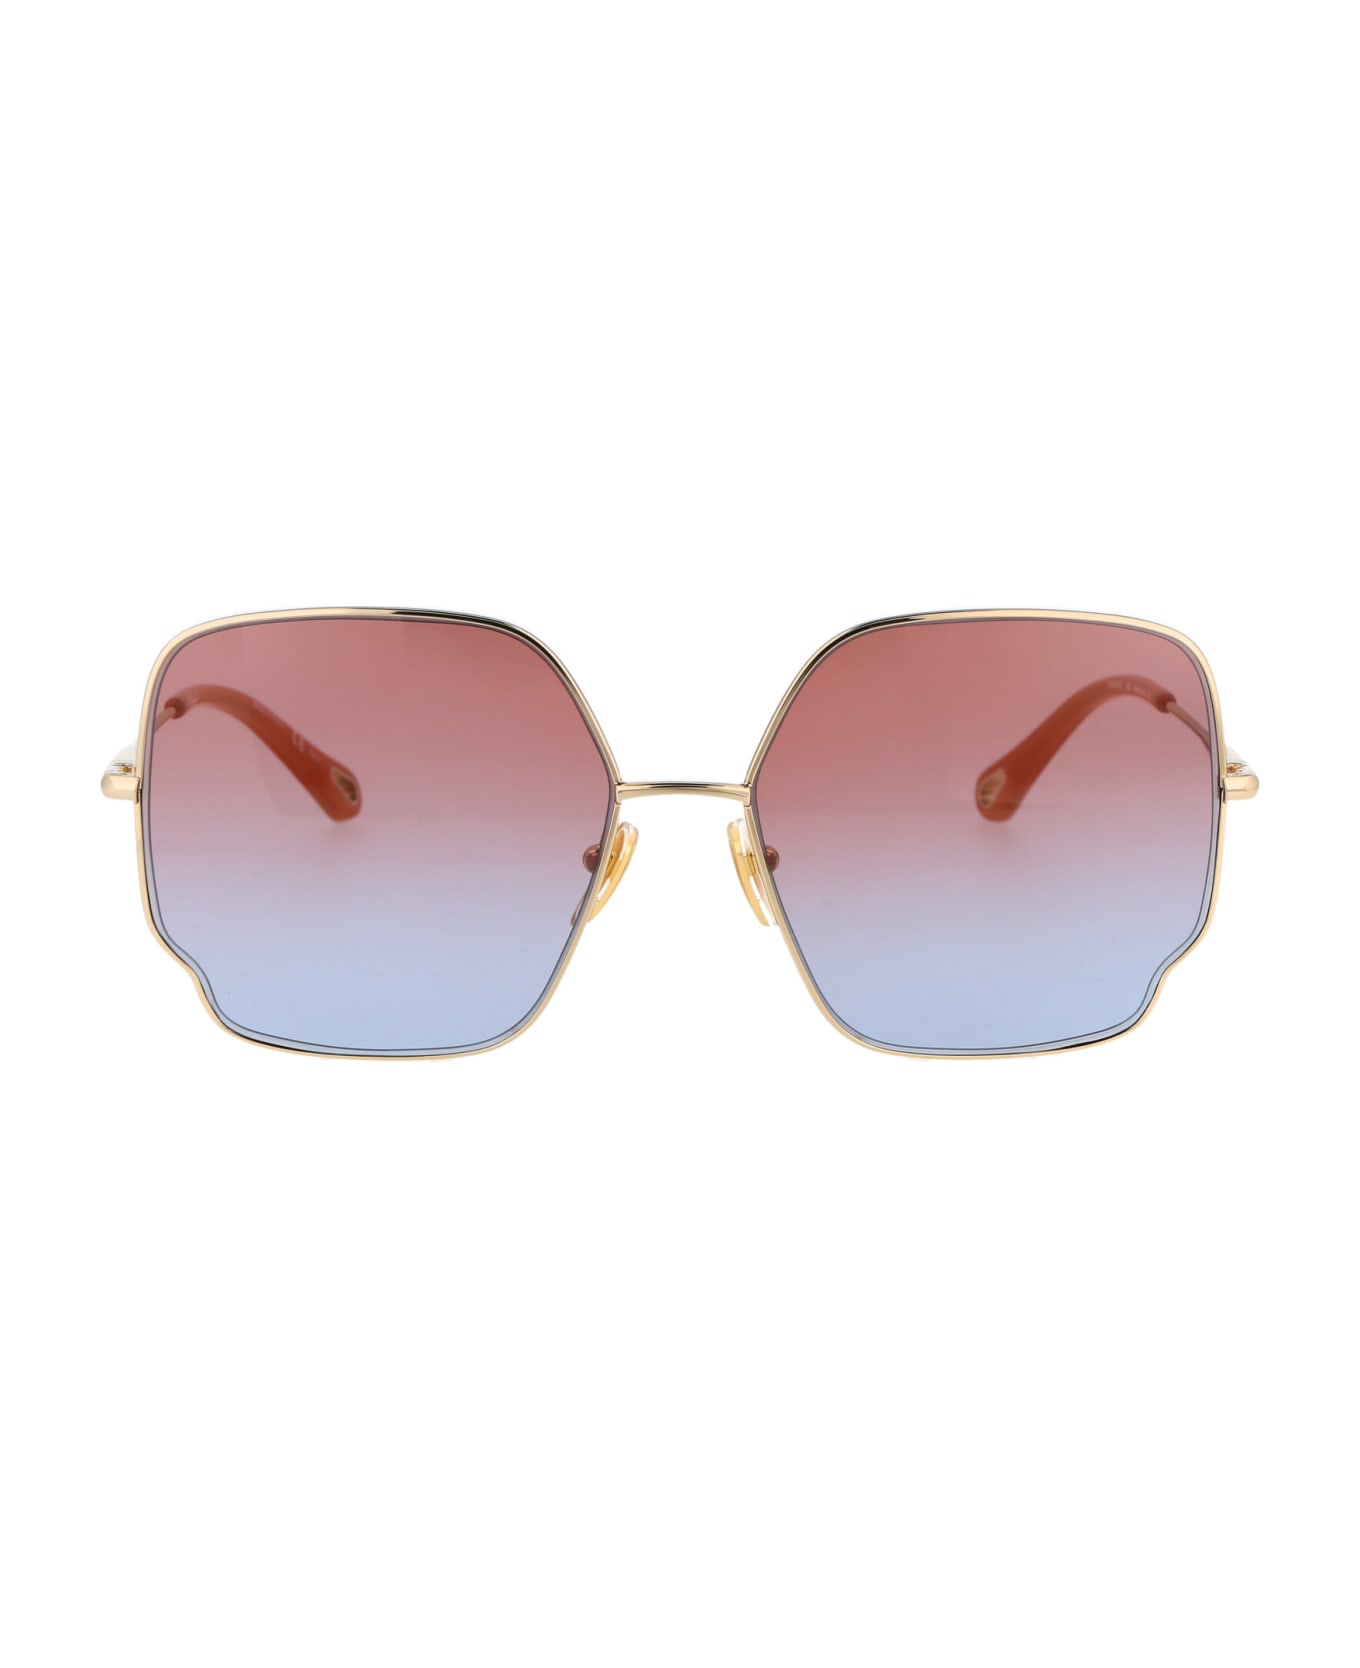 Chloé Eyewear Ch0092s Sunglasses - 002 GOLD GOLD RED サングラス